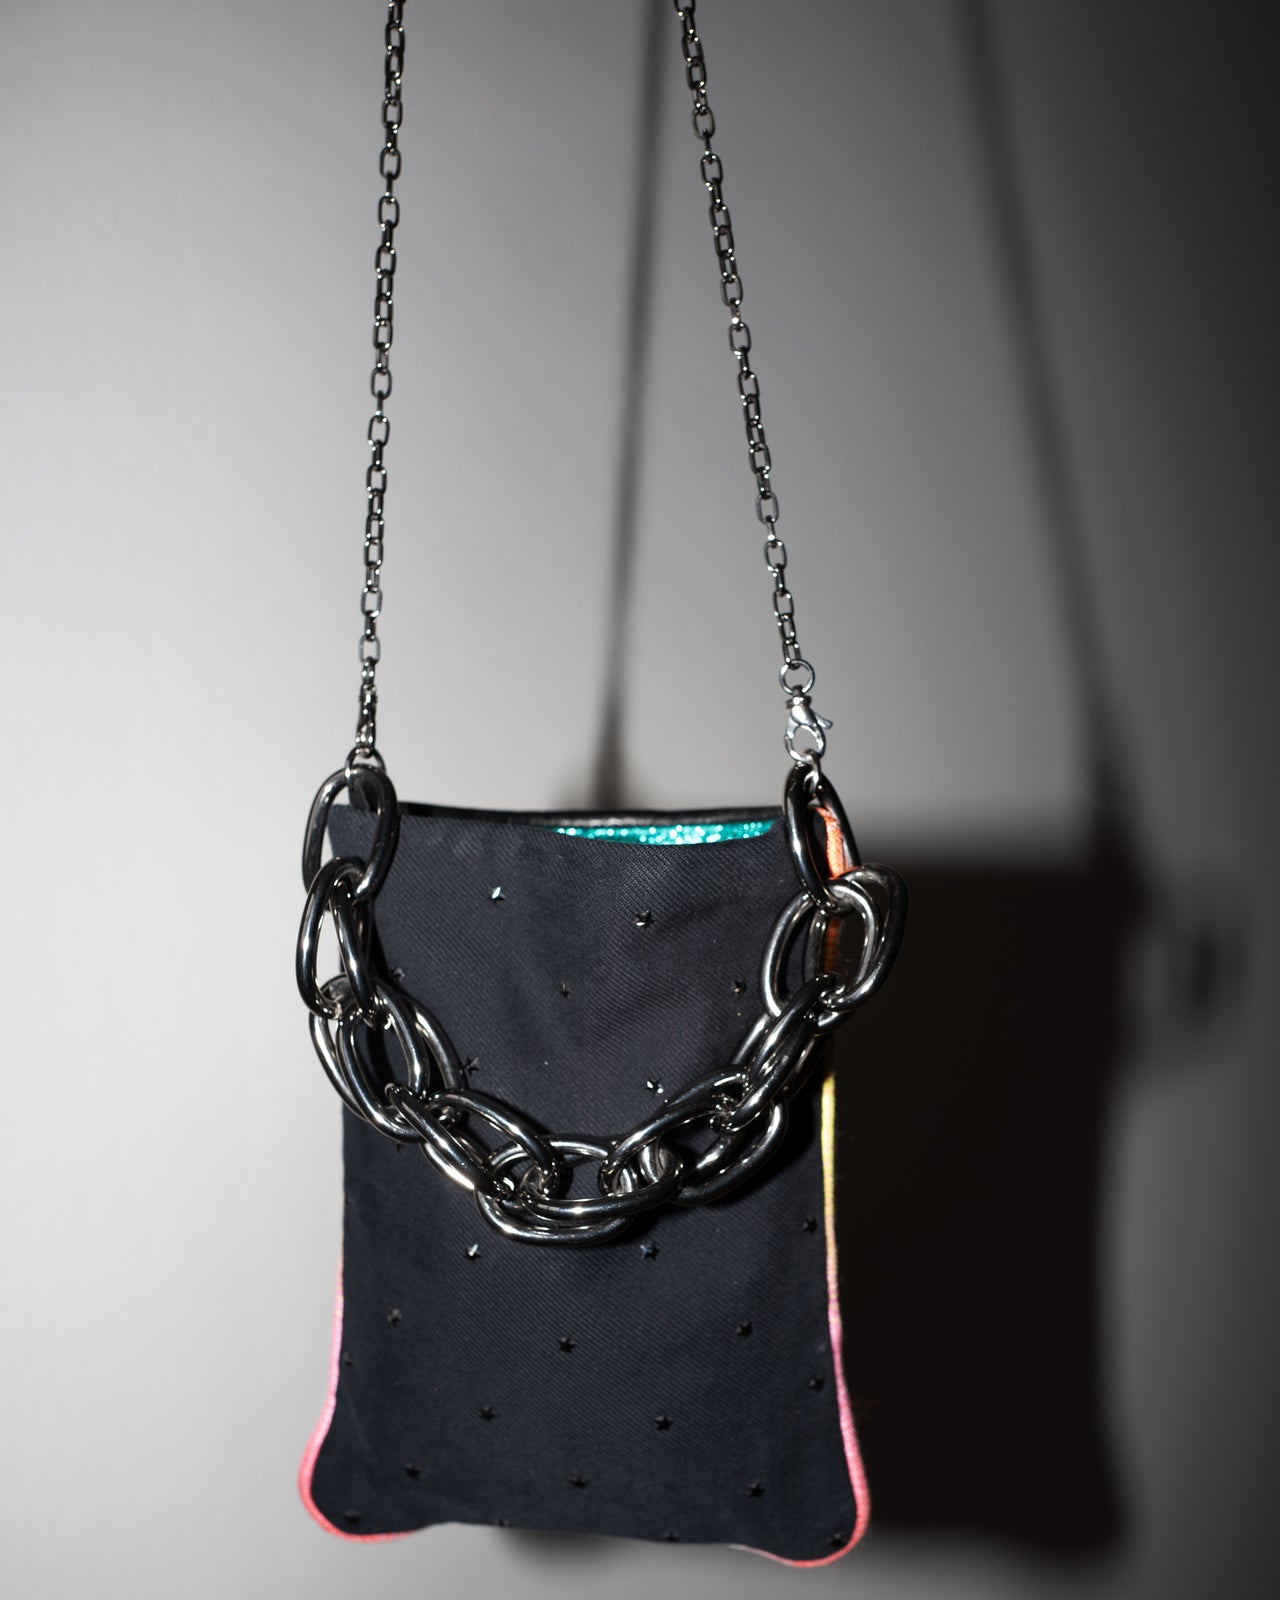 Leatherbag with Black Star Swarovski Crystals Leather Gunmetal Chain